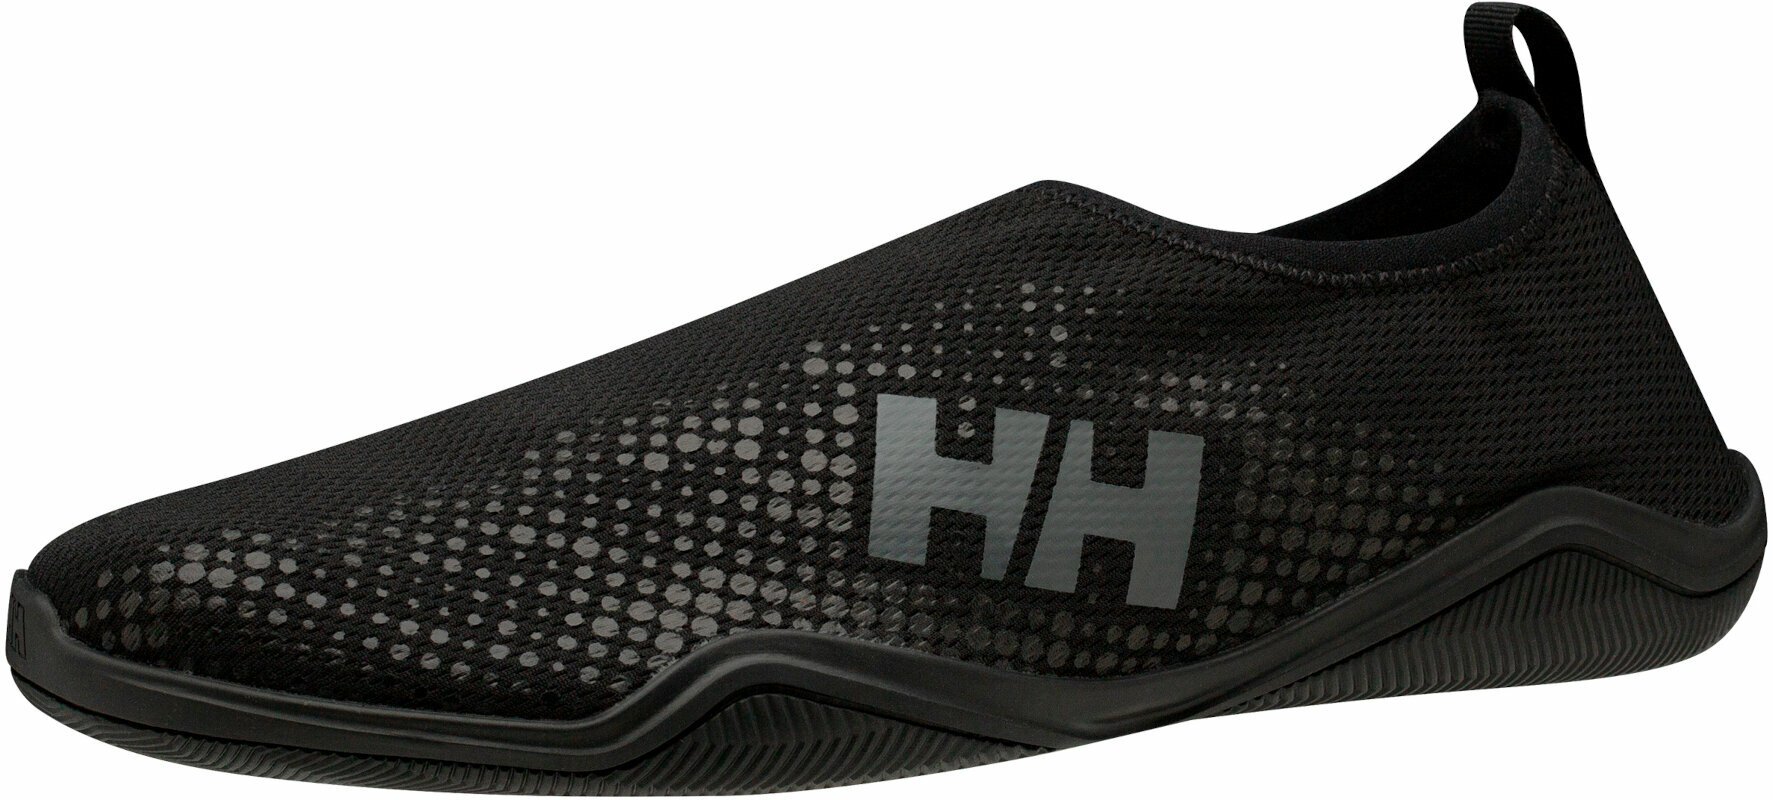 Herrenschuhe Helly Hansen Men's Crest Watermoc Black/Charcoal 44